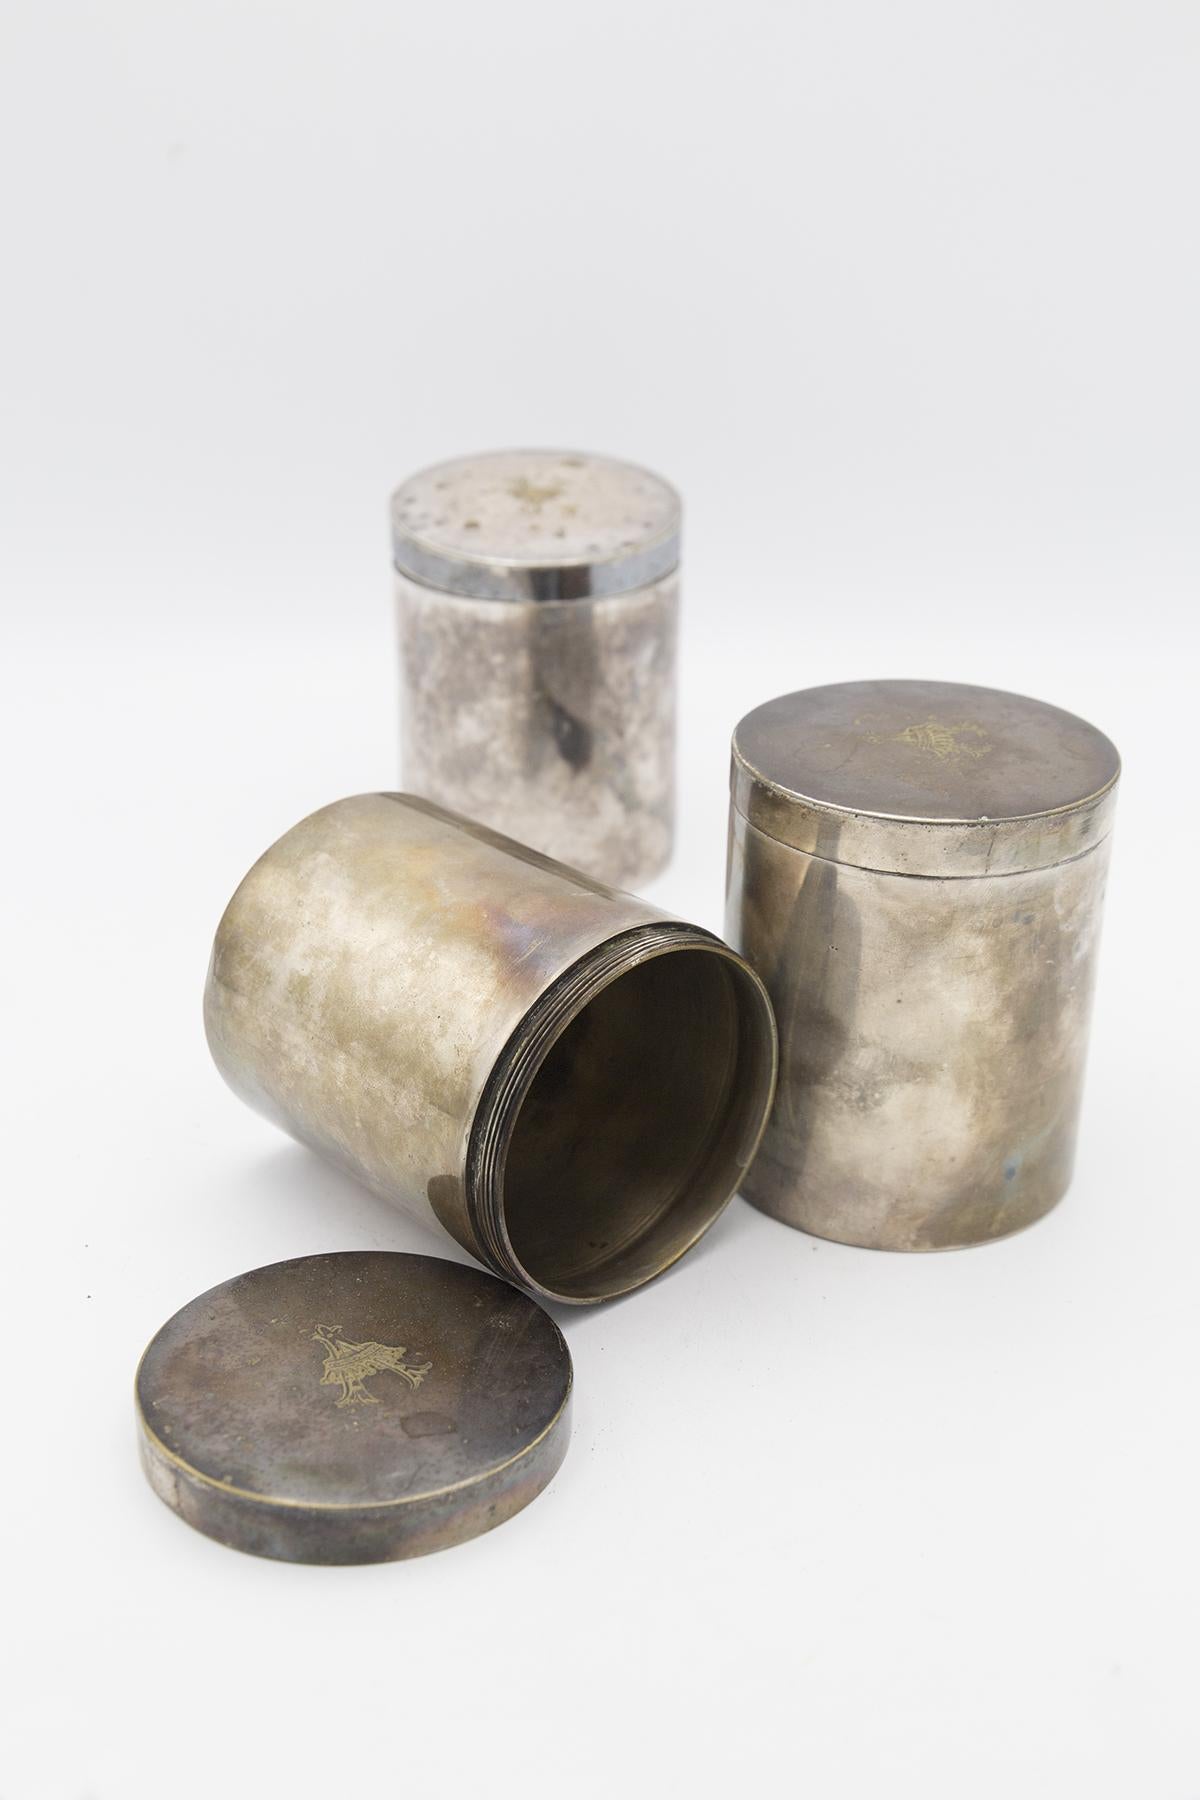 Triptych of Silver Jars branded Boin Taburet a Paris For Sale 5